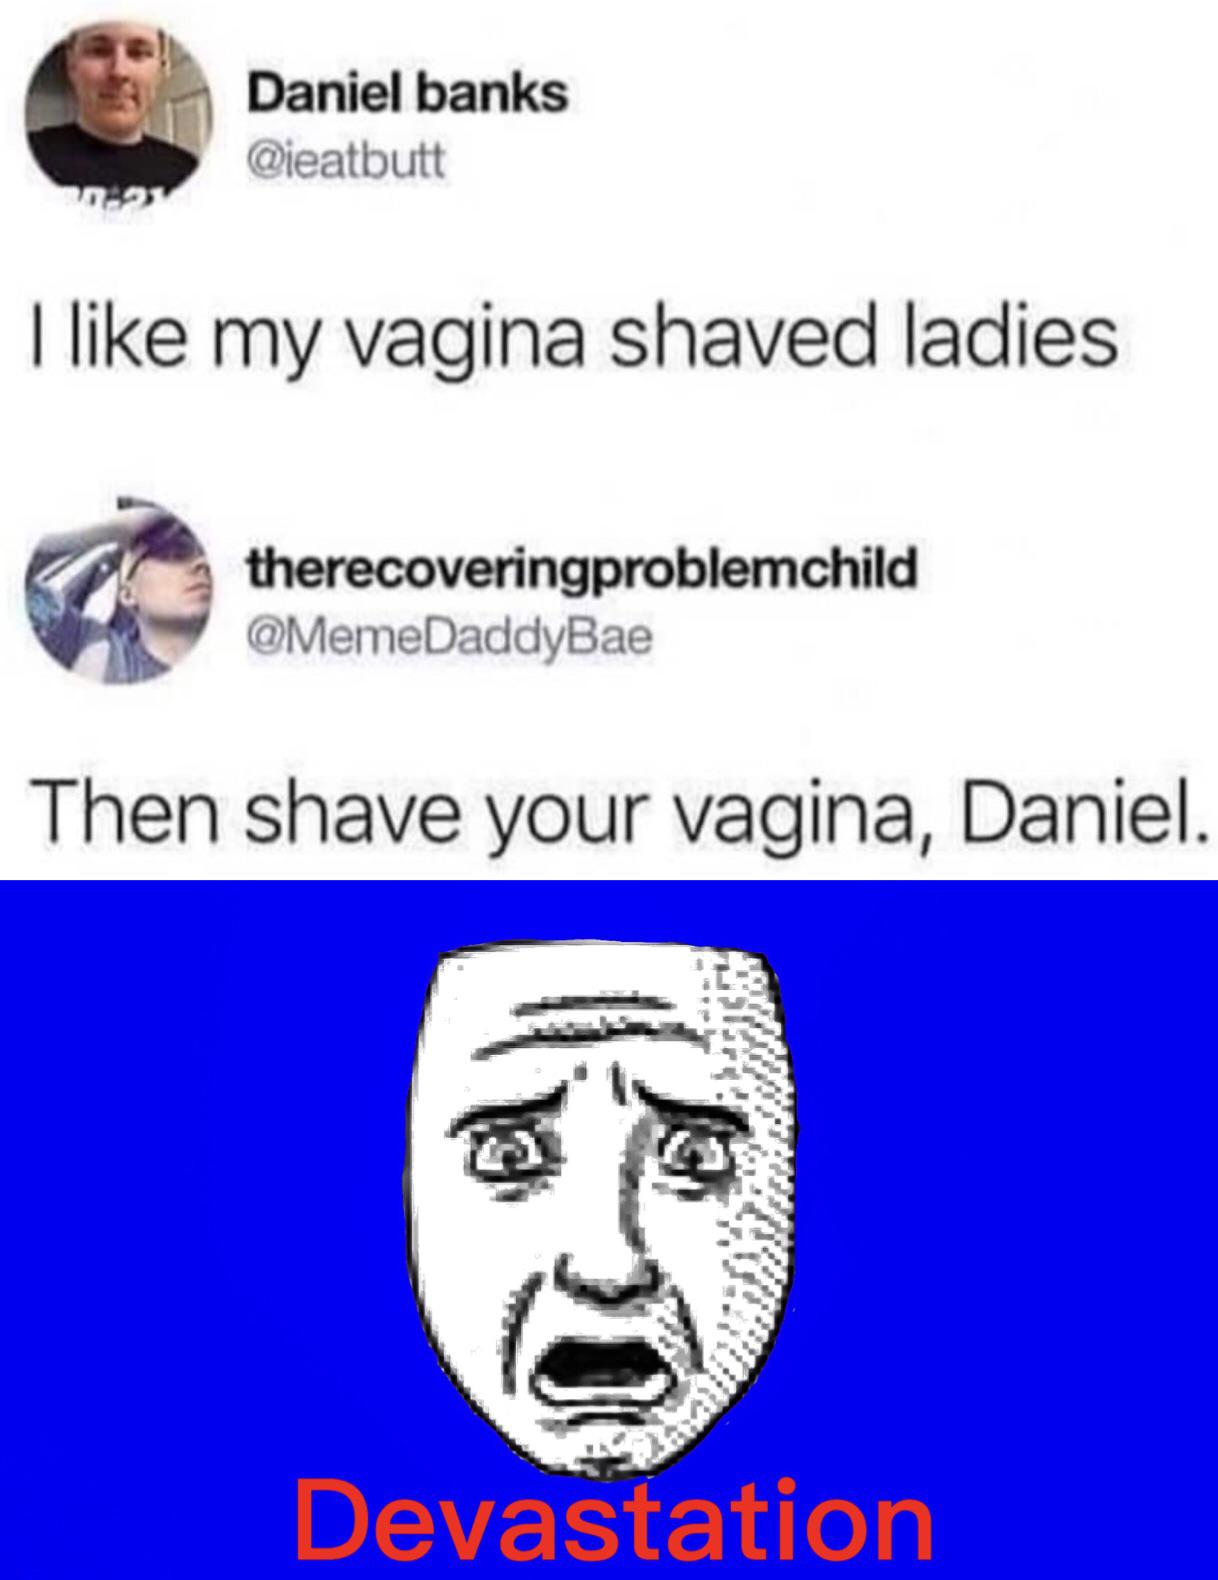 like my pussy shaved ladies daniel - Daniel banks I my vagina shaved ladies therecoveringproblemchild Then shave your vagina, Daniel. Devastation